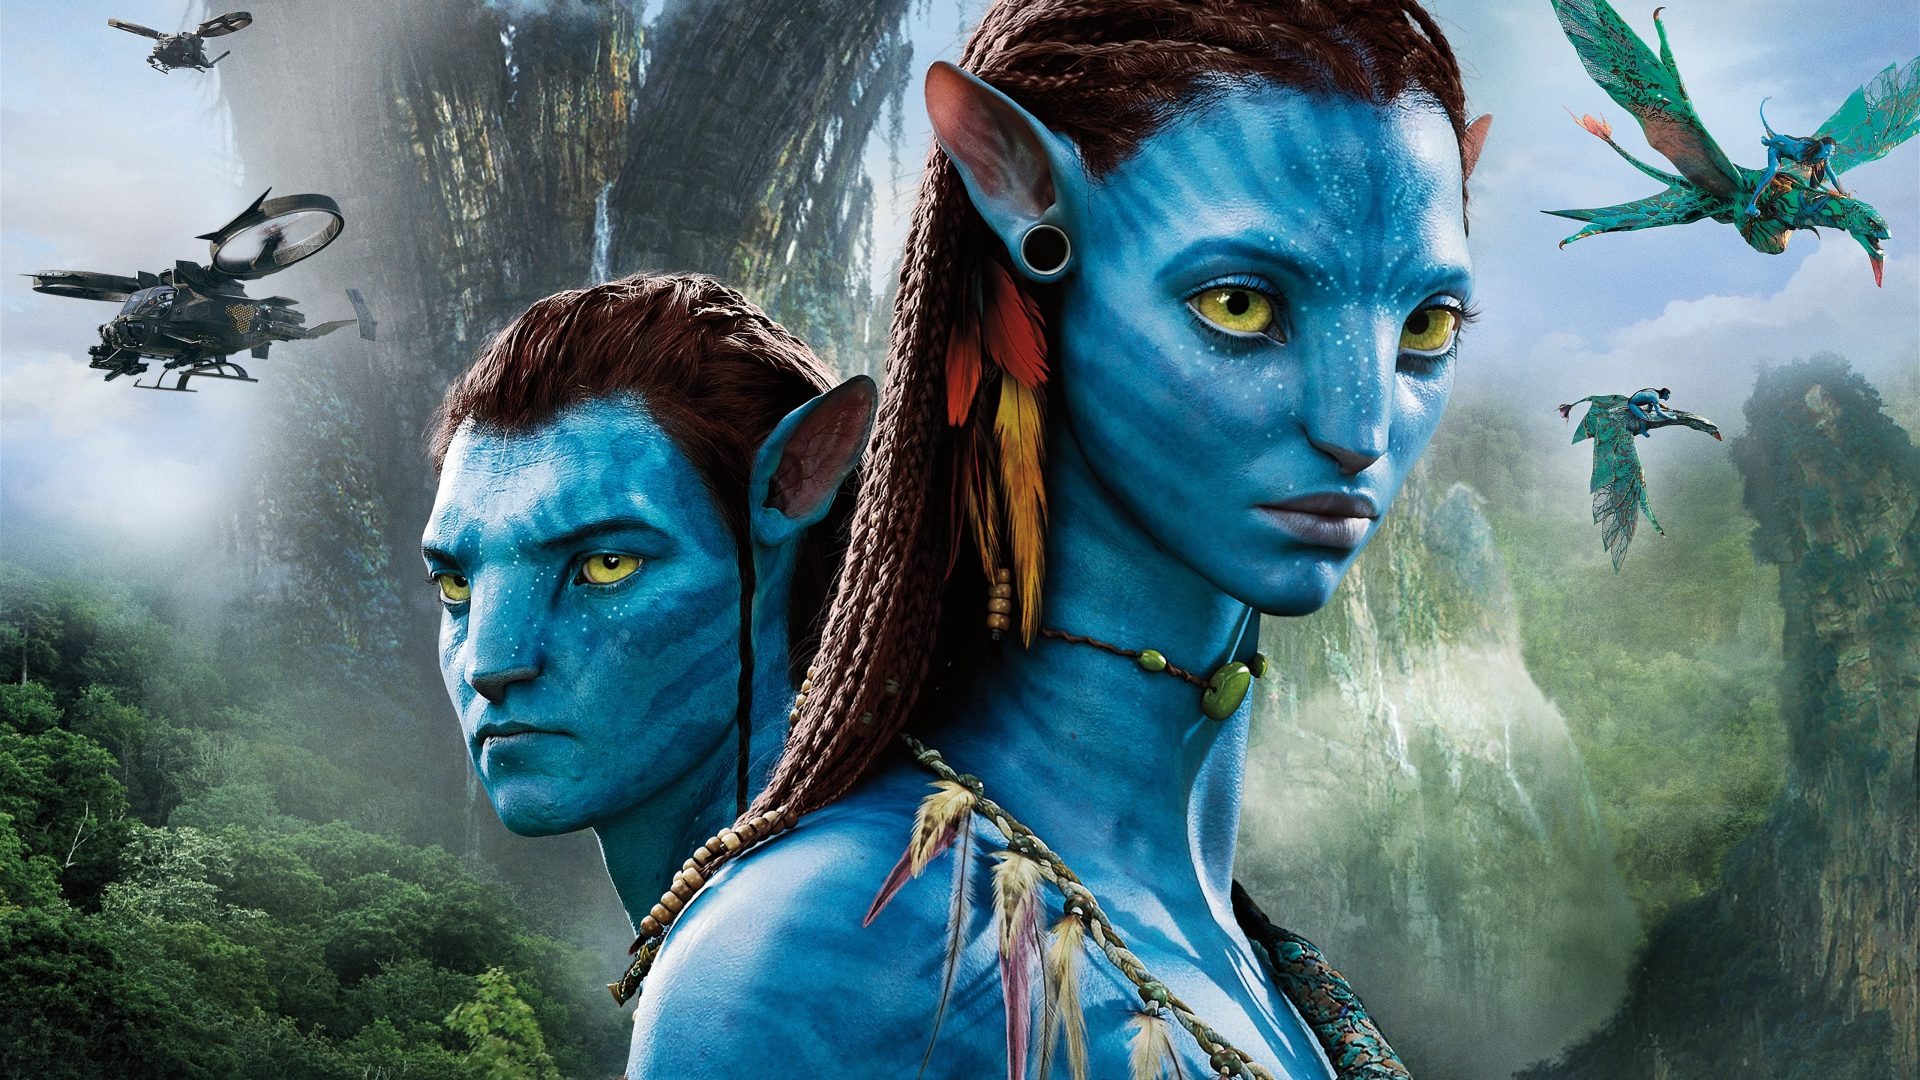 Avatar 2 trailer may release alongside a certain Marvel movie  TechRadar